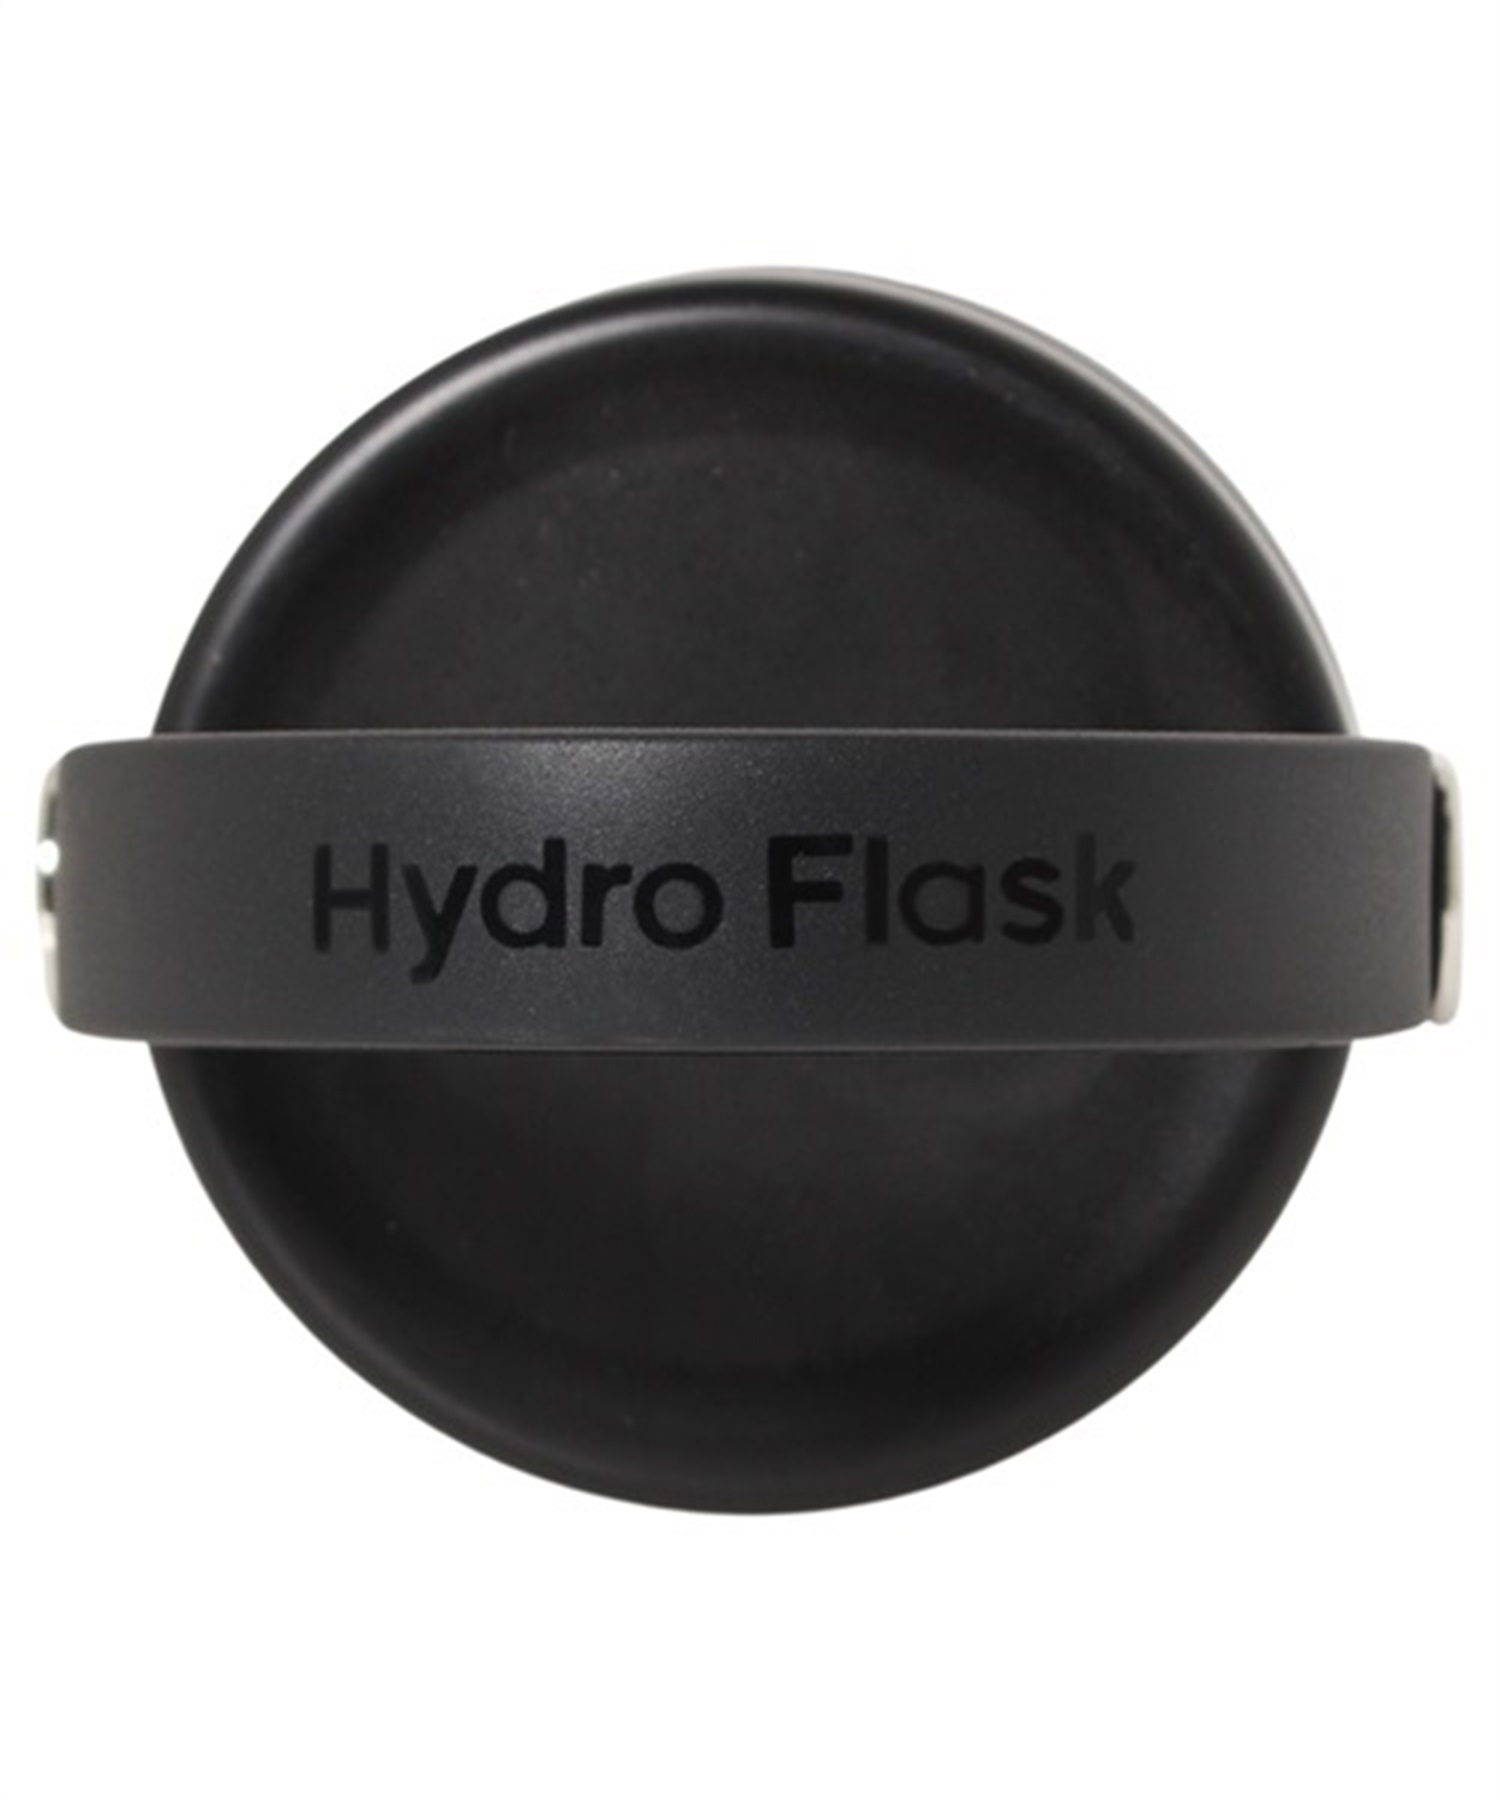 Hydro Flask ハイドロフラスク 5089024 雑貨 水筒 タンブラー 保冷 保温 KK D27(BK-F)